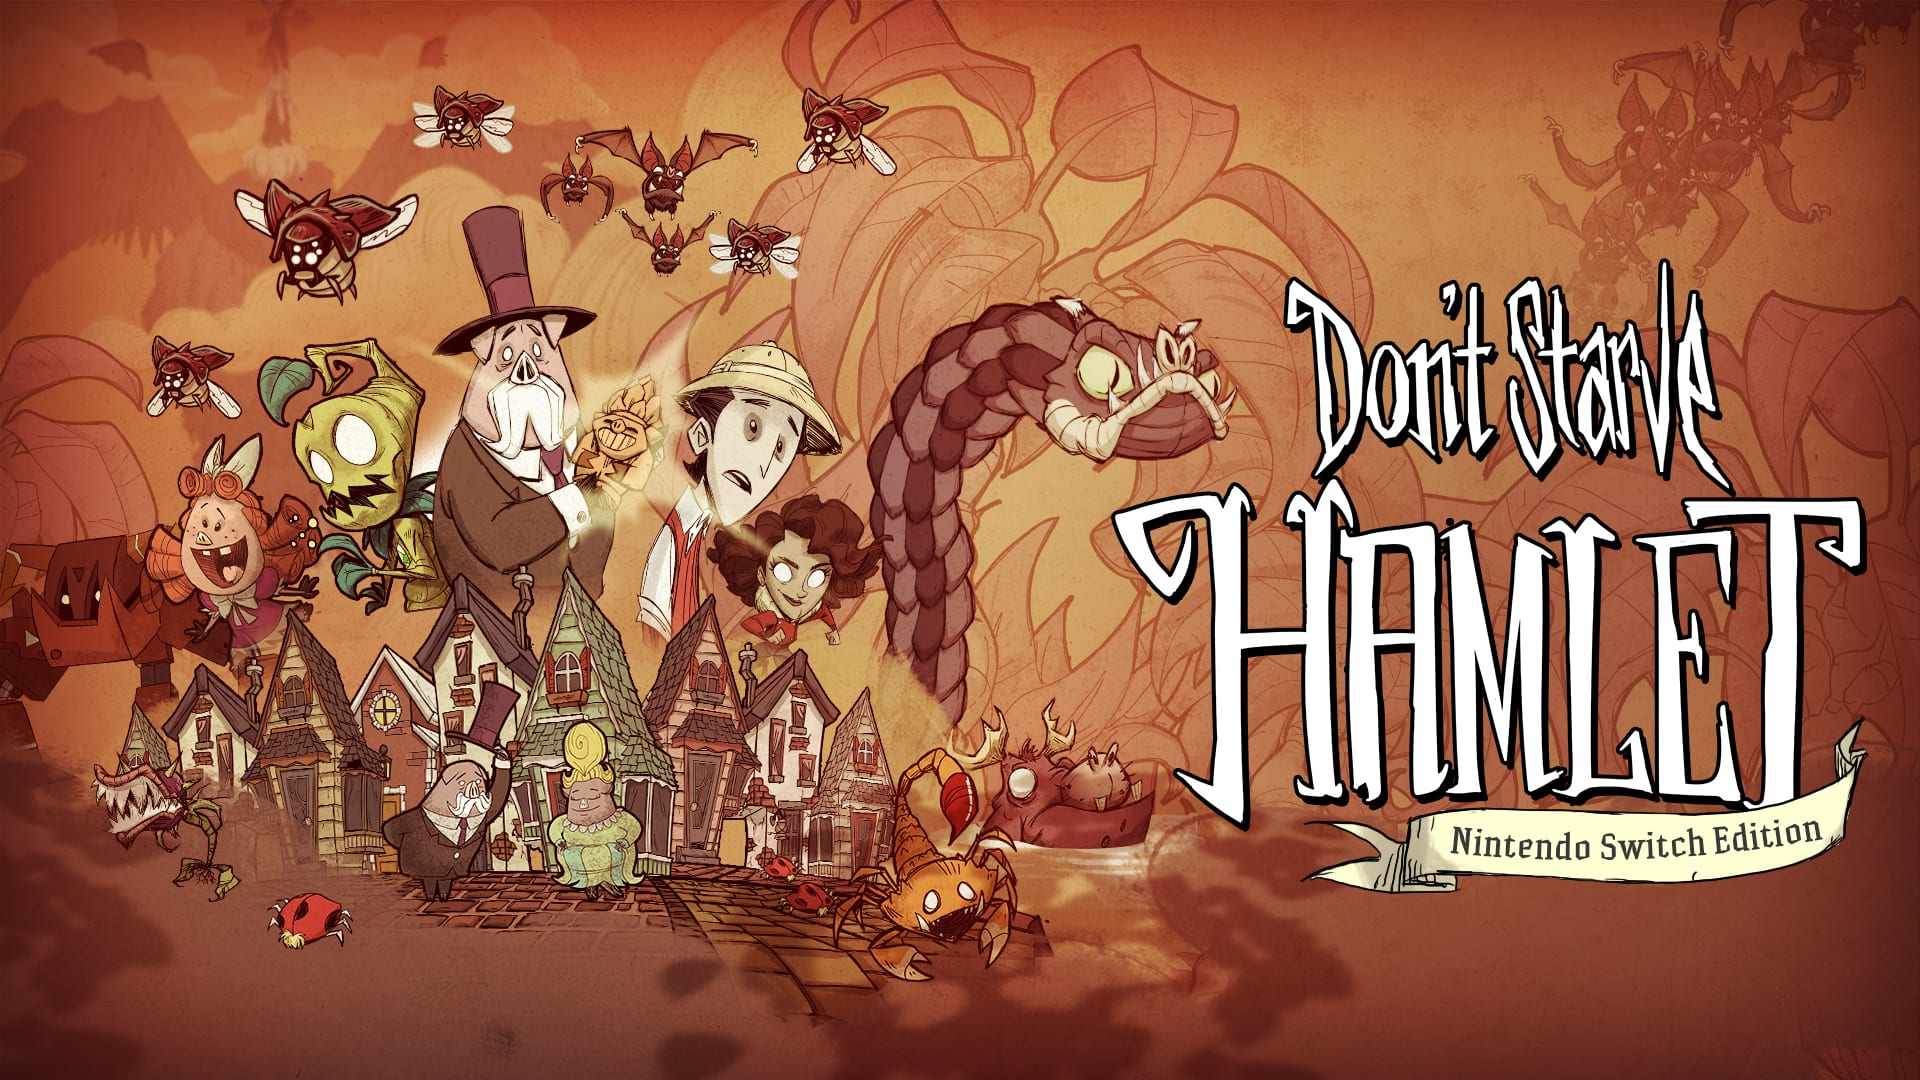 Don't Starve: Hamlet Nintendo Switch Edition